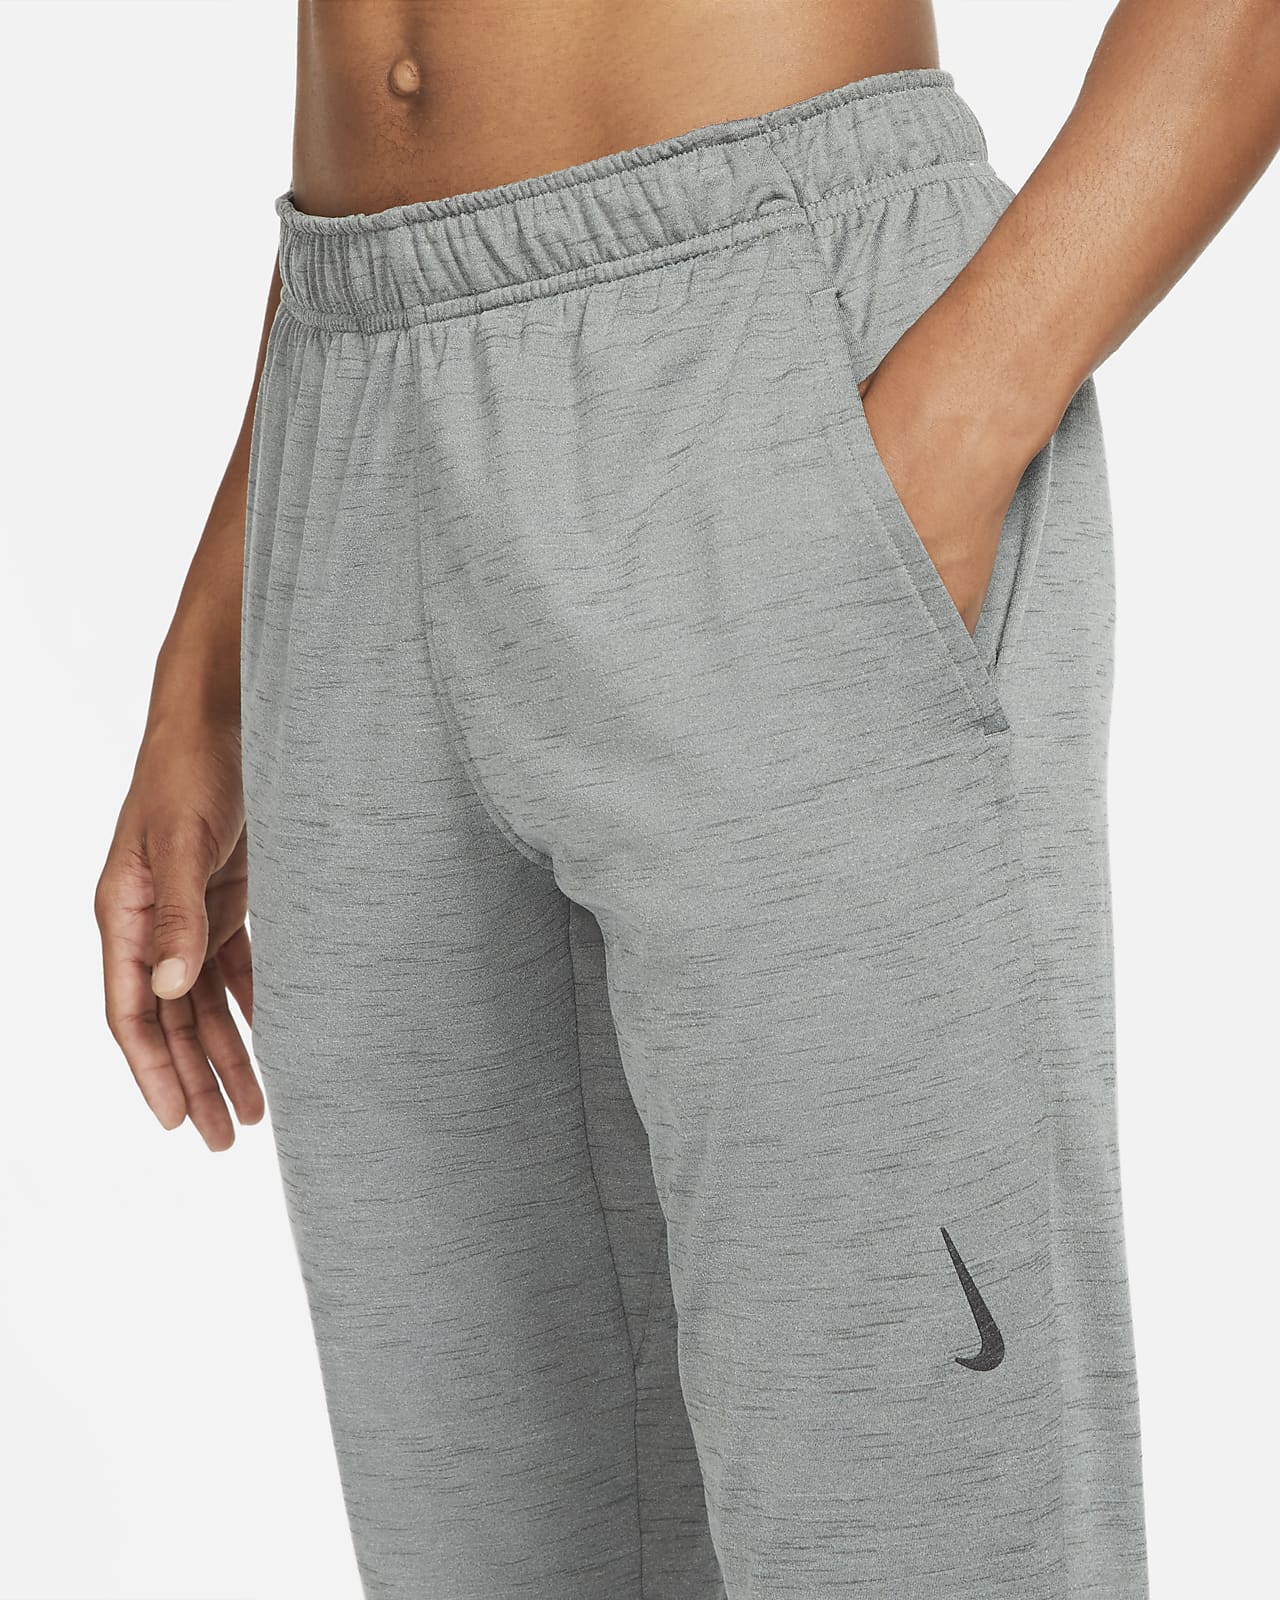  Nike Yoga Pants Women